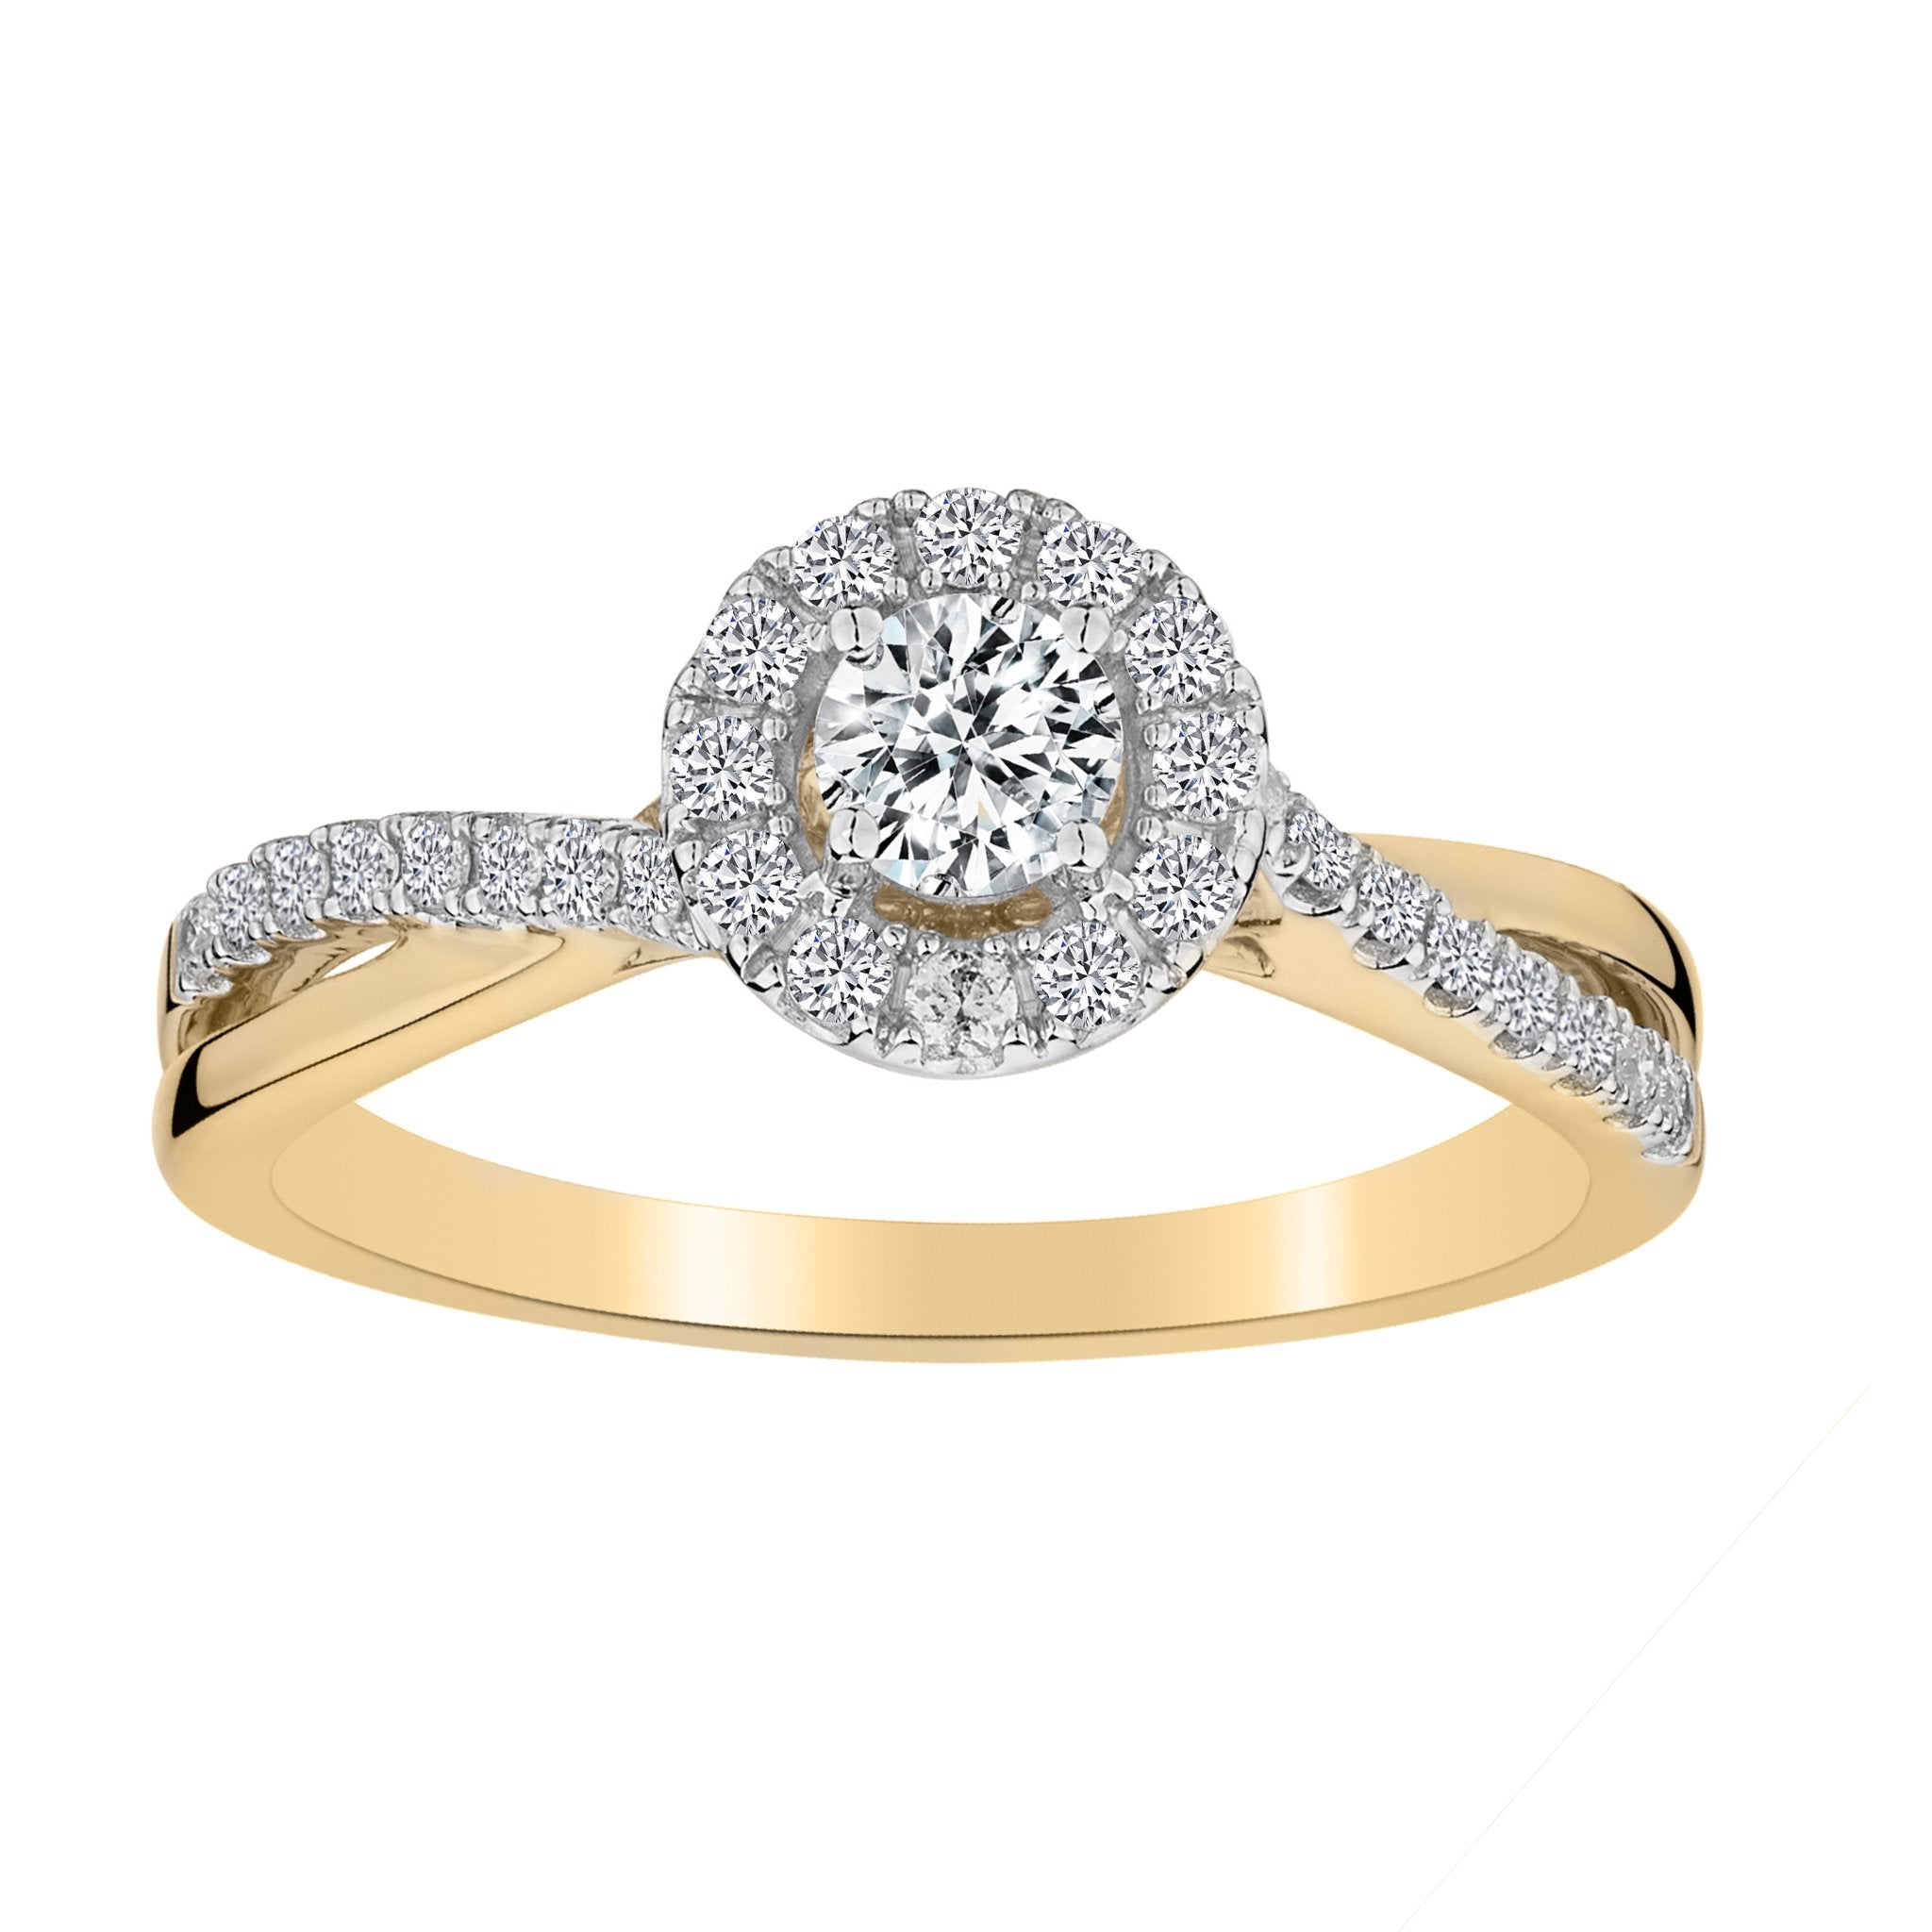 .50 CARAT DIAMOND HALO RING, 10kt YELLOW GOLD - Griffin Jewellery Designs